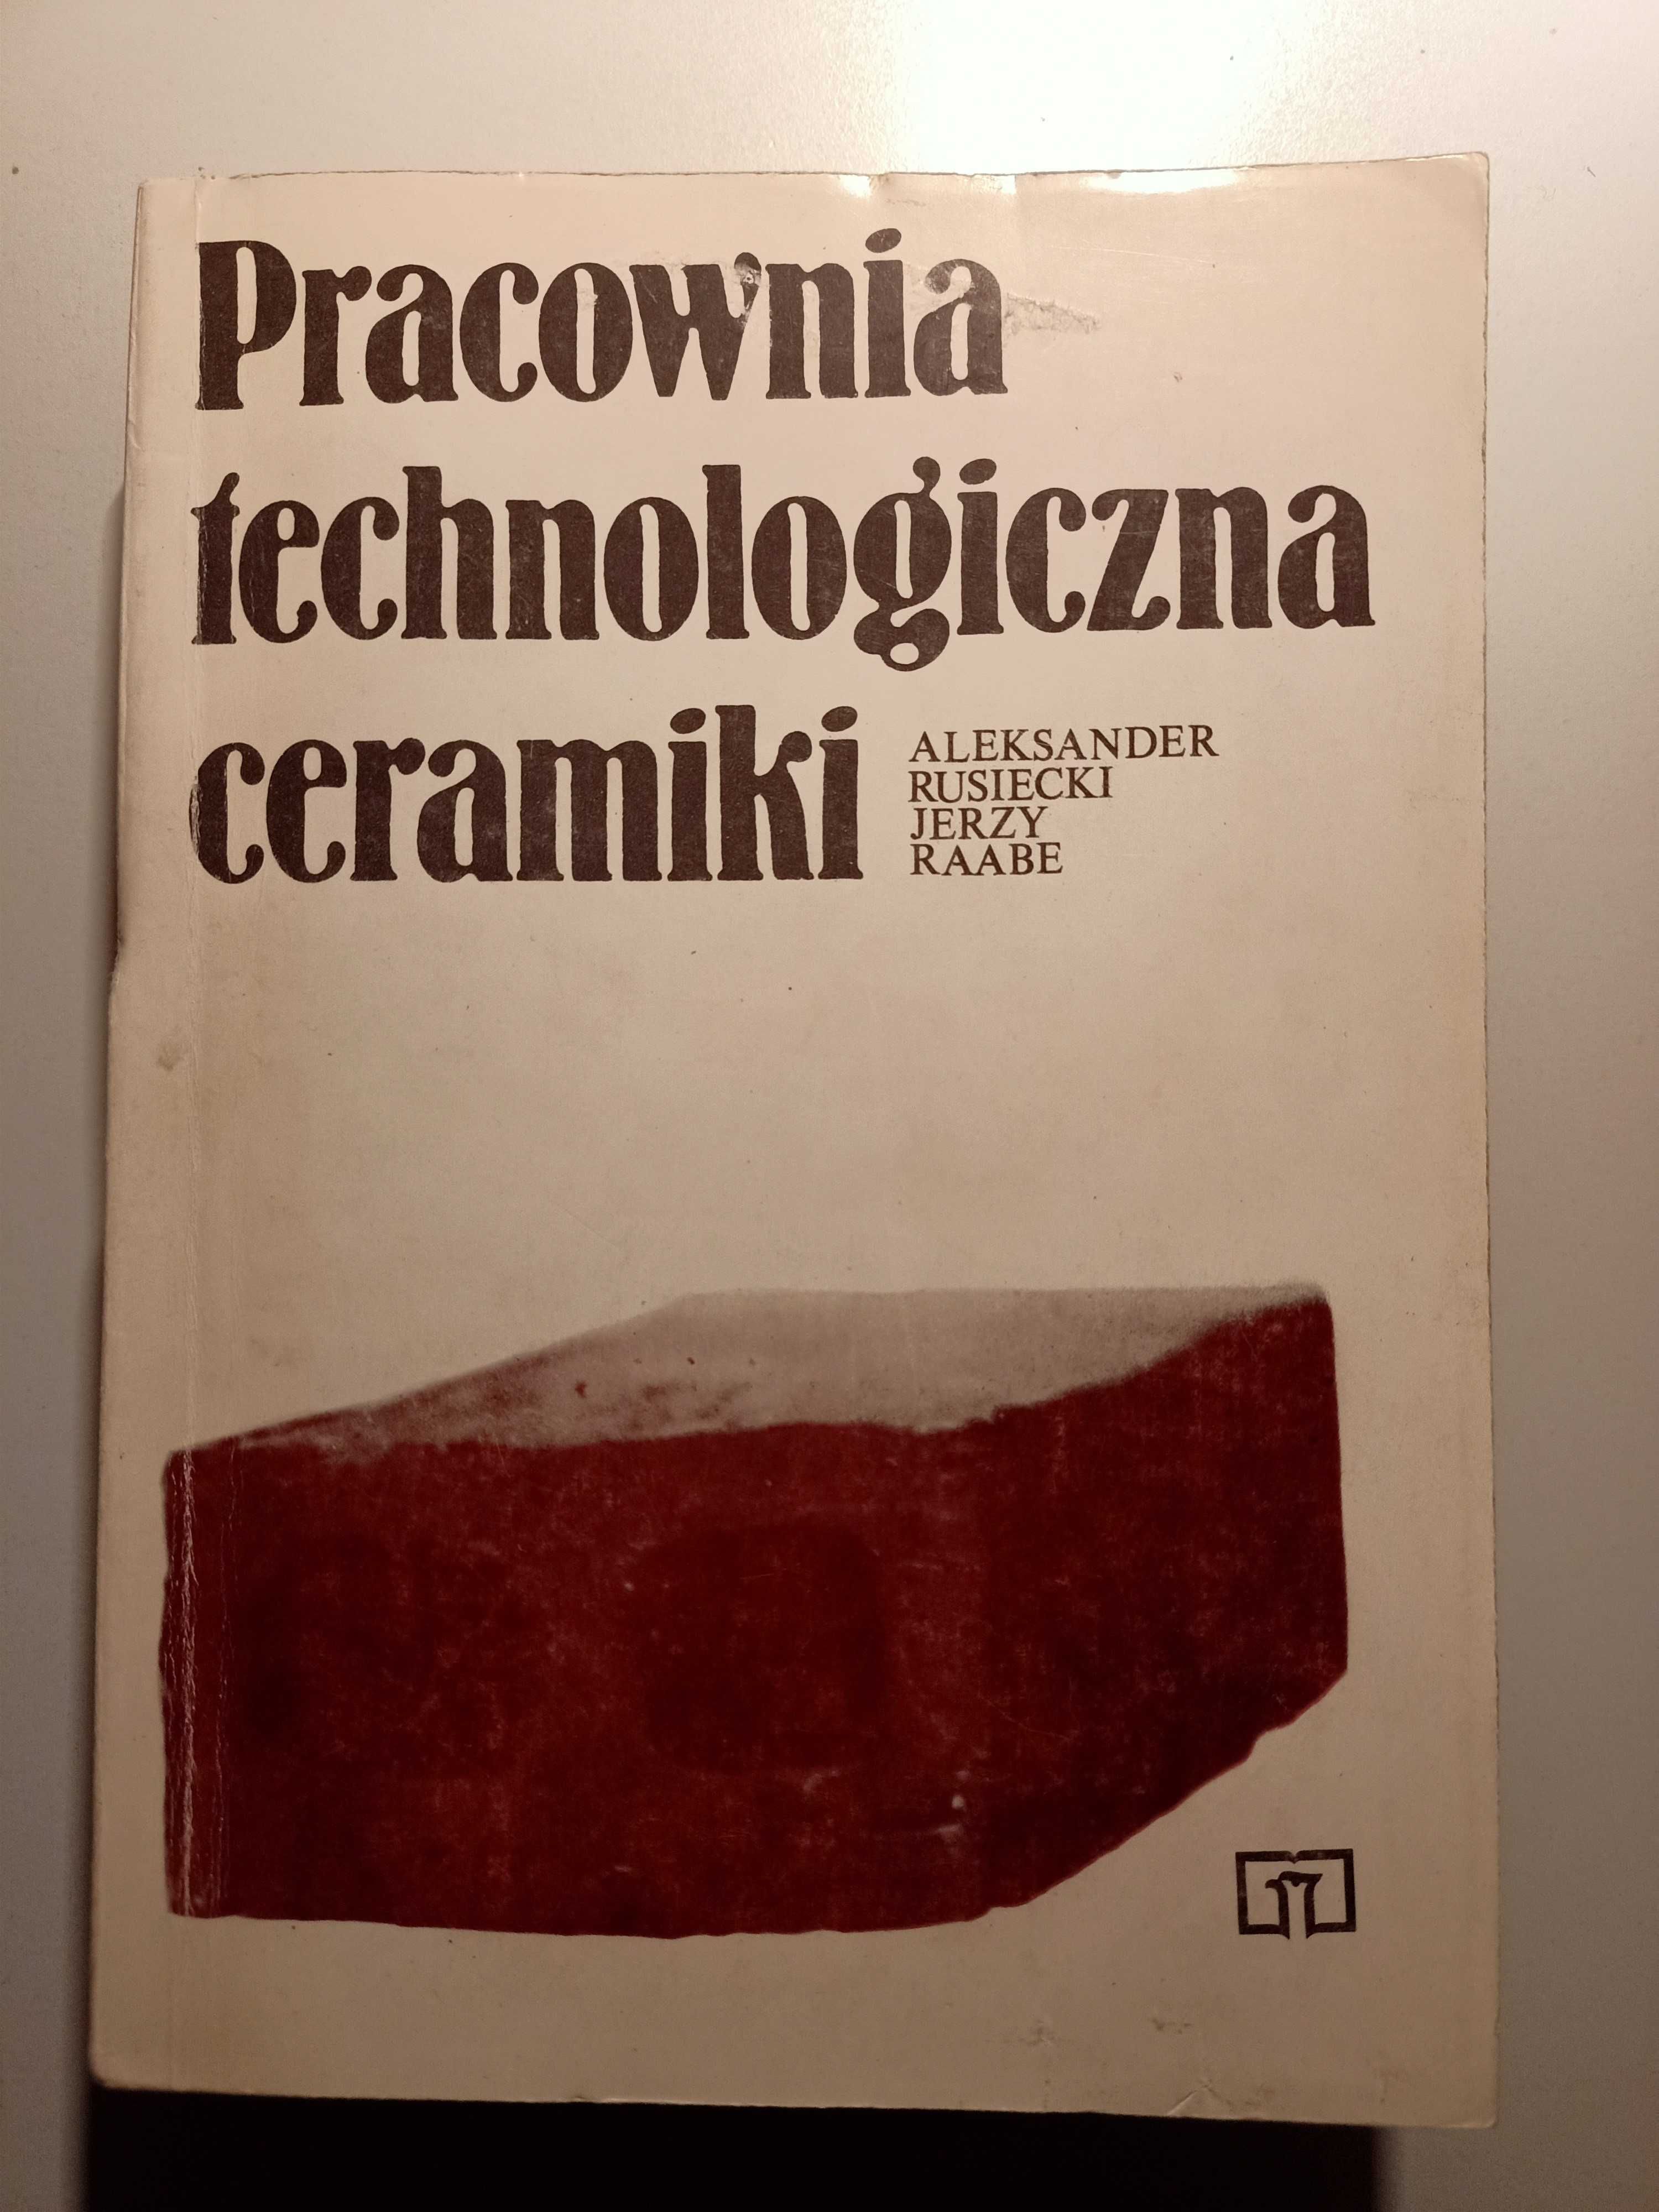 Pracownia technologiczna ceramiki - Rusiecki, Raabe 1972